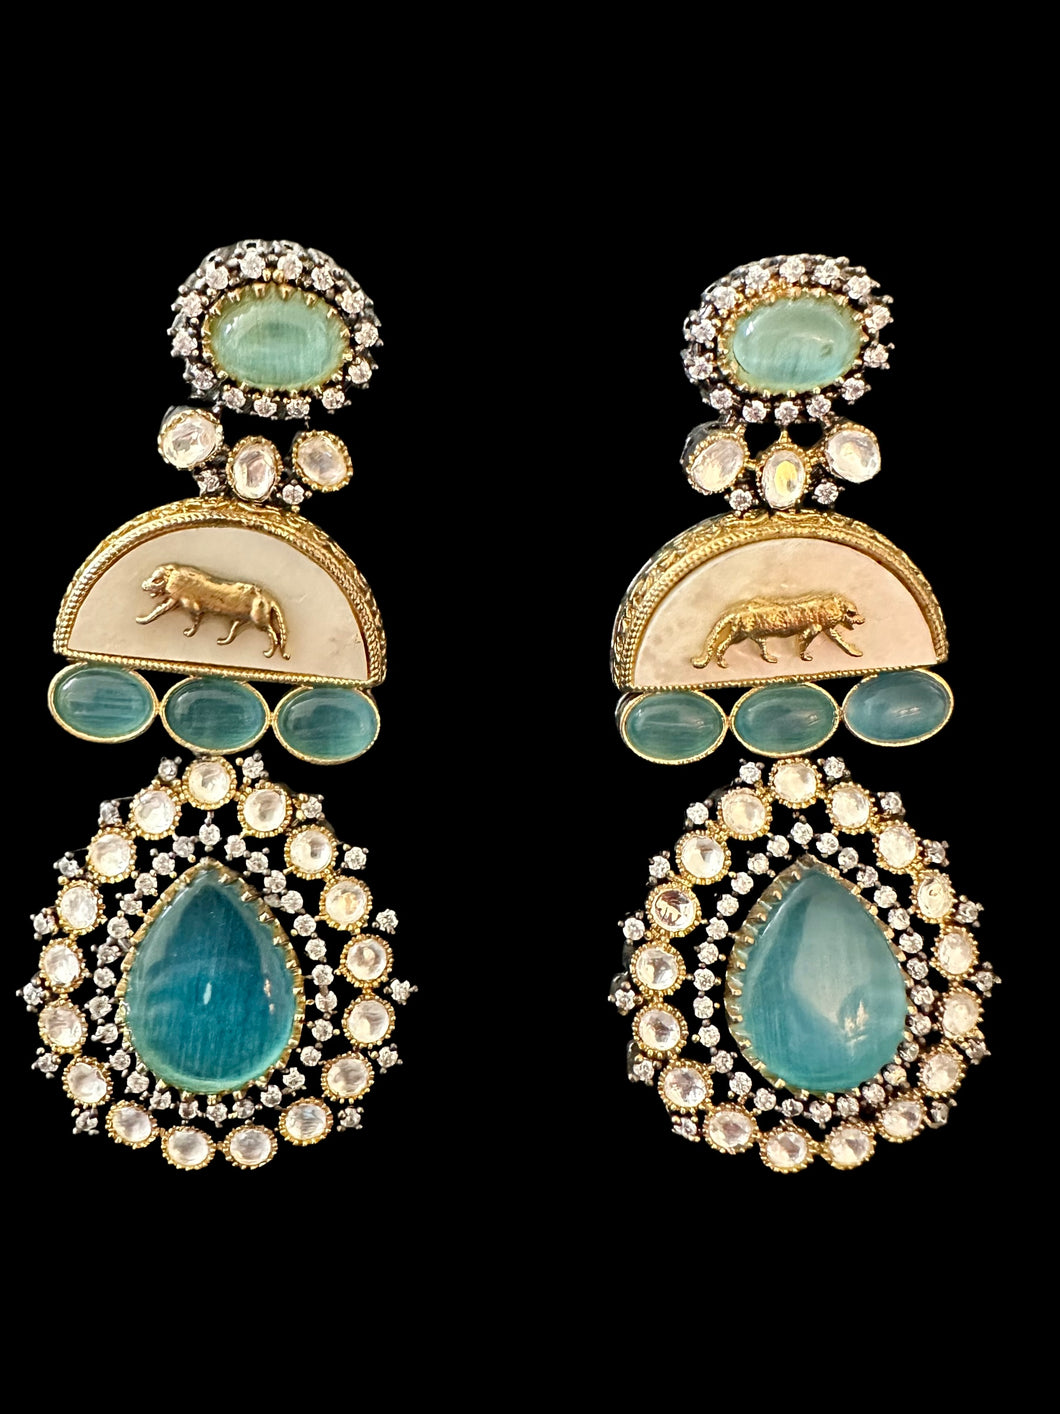 Sabyasachi inspired turquoise earrings